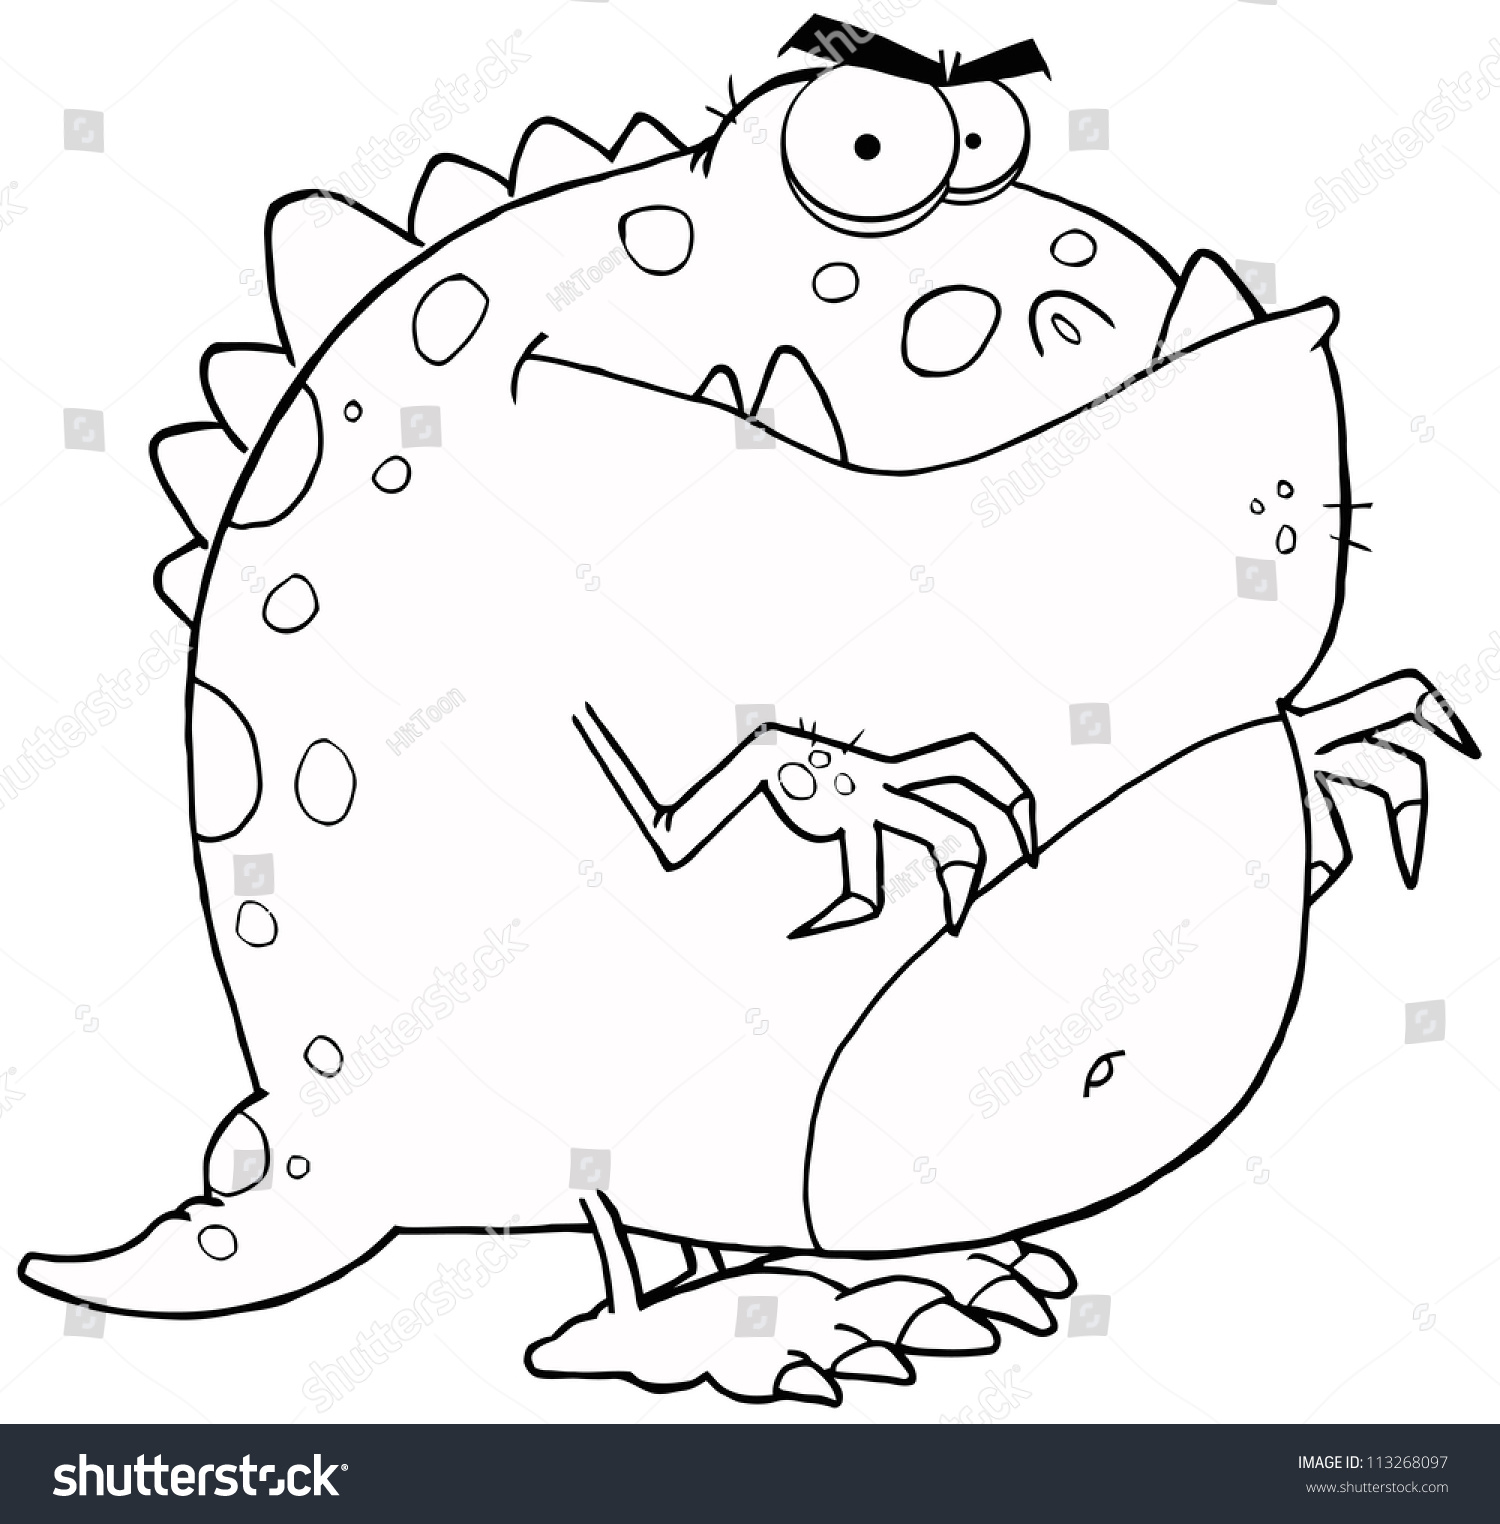 Outlined Dinosaur Cartoon Character Stock Vector Illustration 113268097